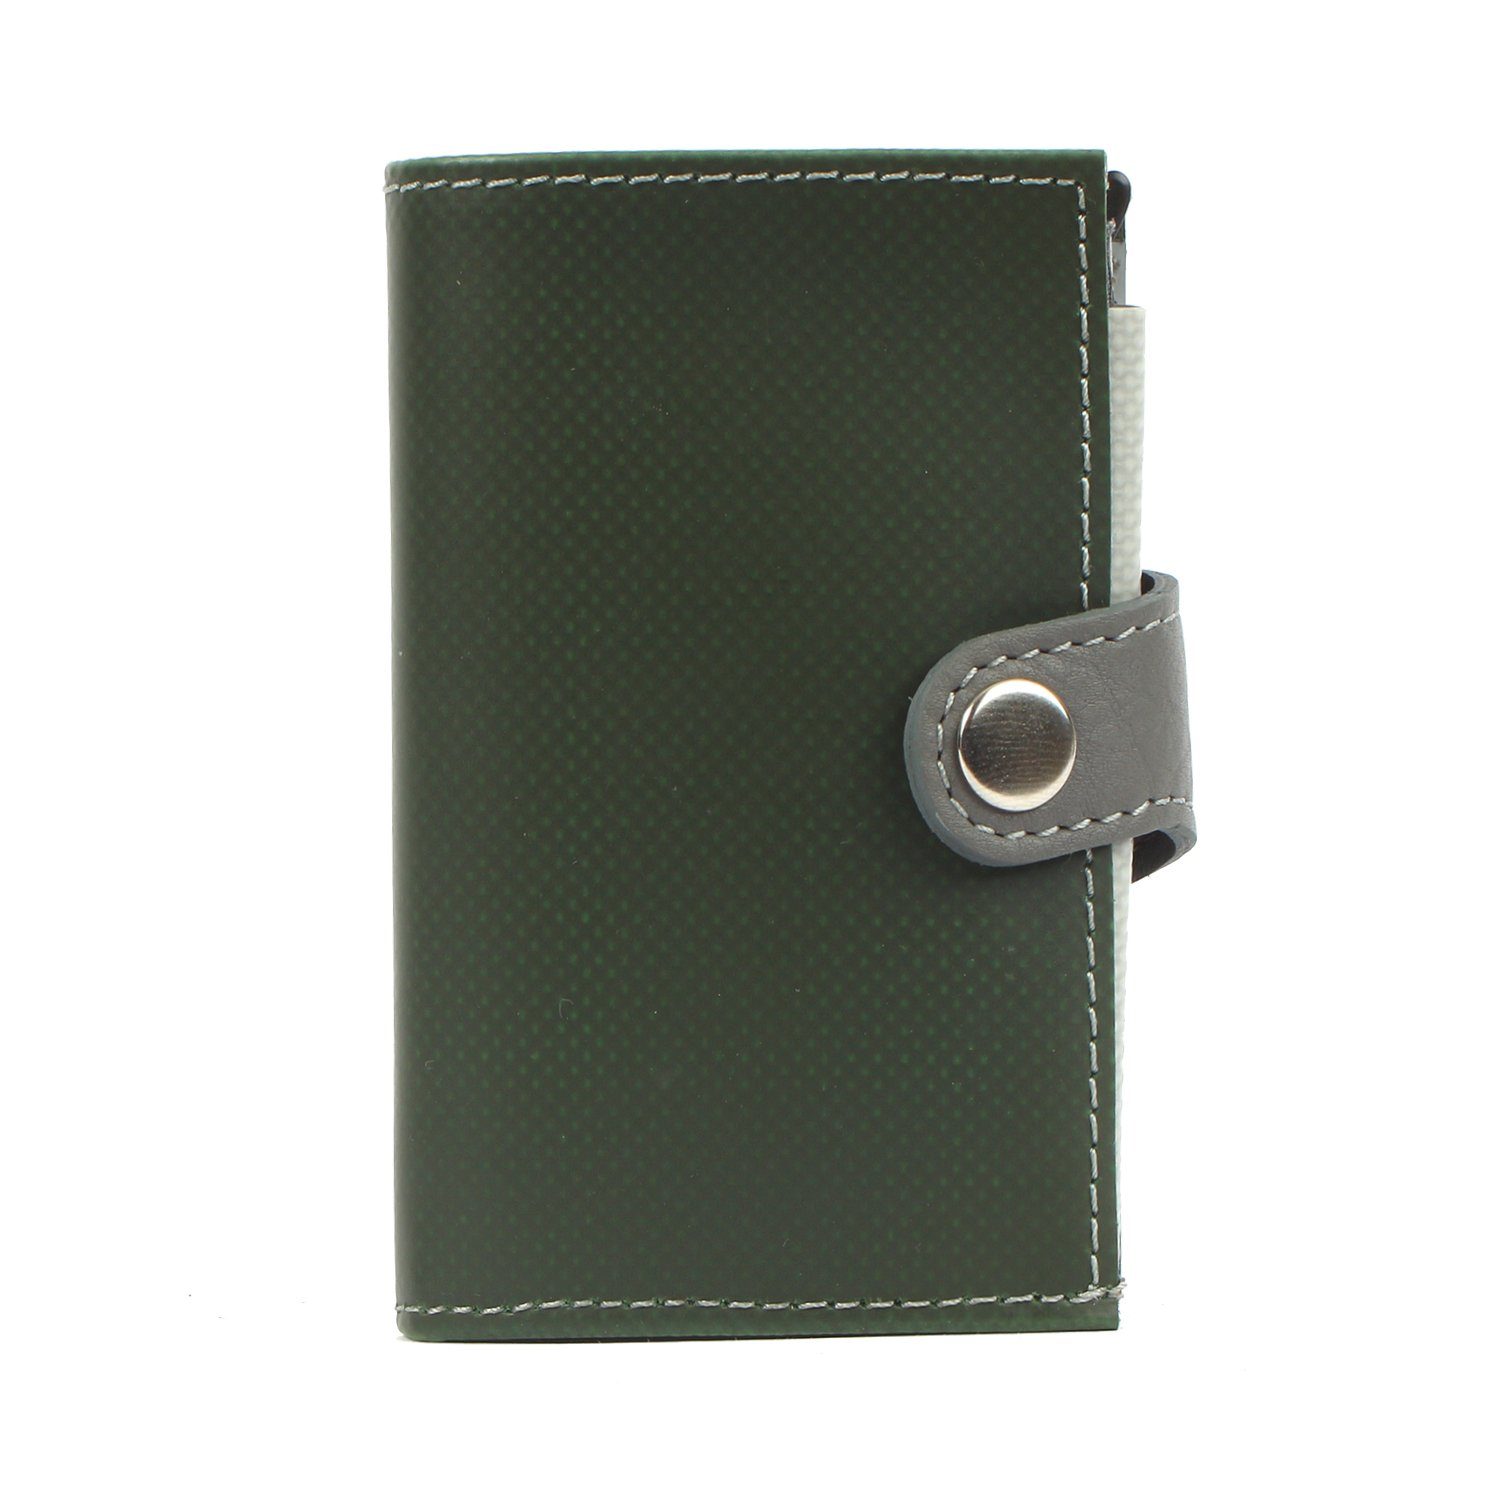 7clouds Mini single Kreditkartenbörse Geldbörse noonyu tarpaulin, Upcycling junglegreen aus Tarpaulin